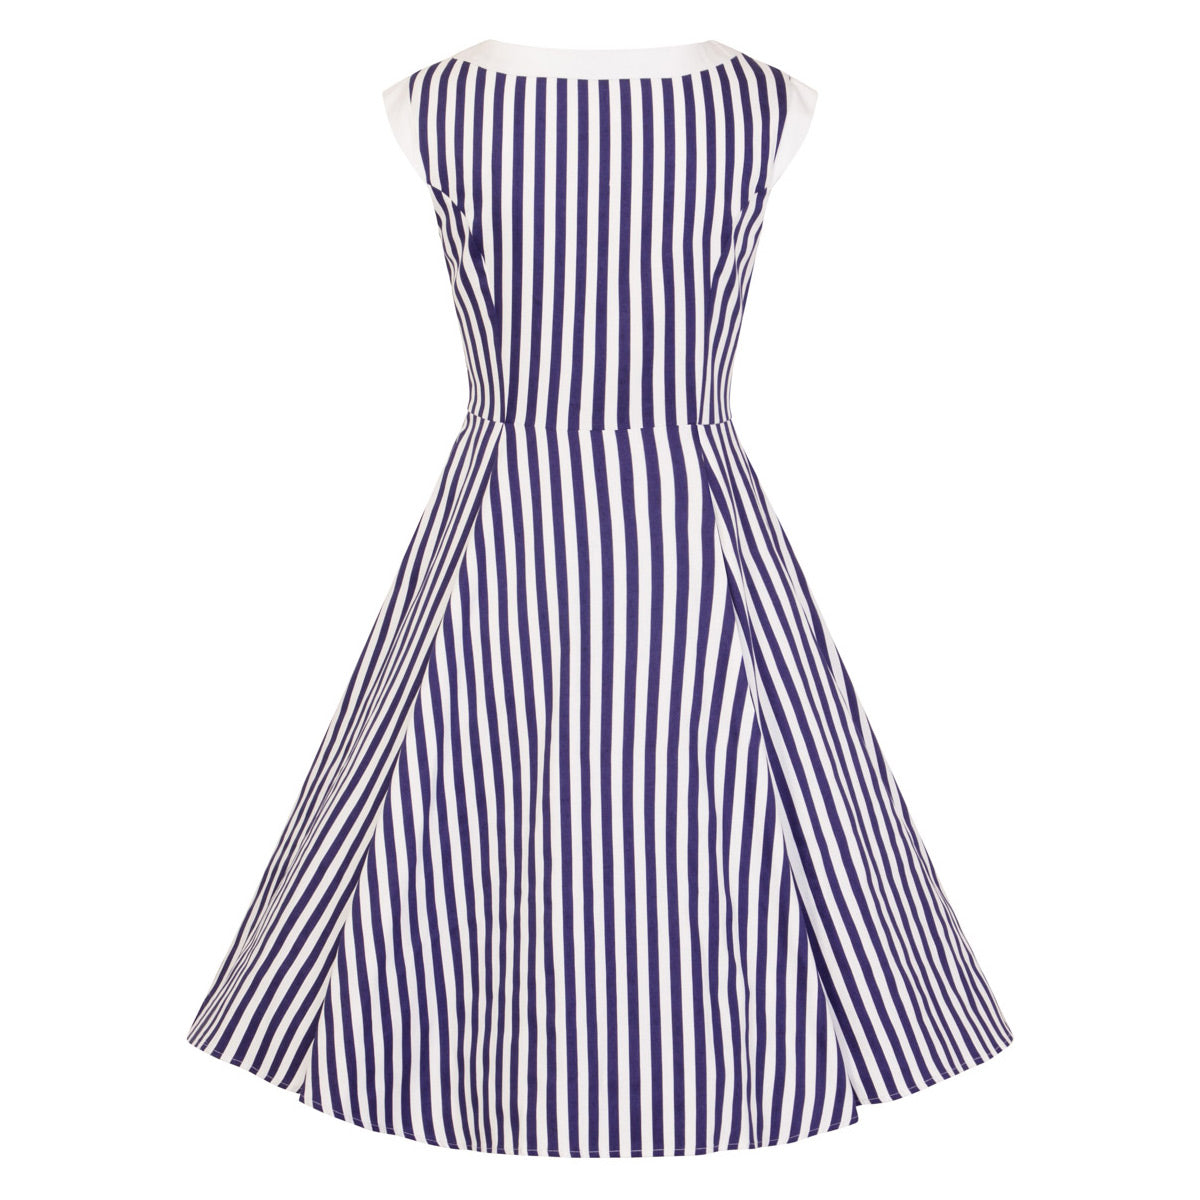 Navy Blue and White Striped Sleeveless Rockabilly 50s Swing Dress - Pretty Kitty Fashion